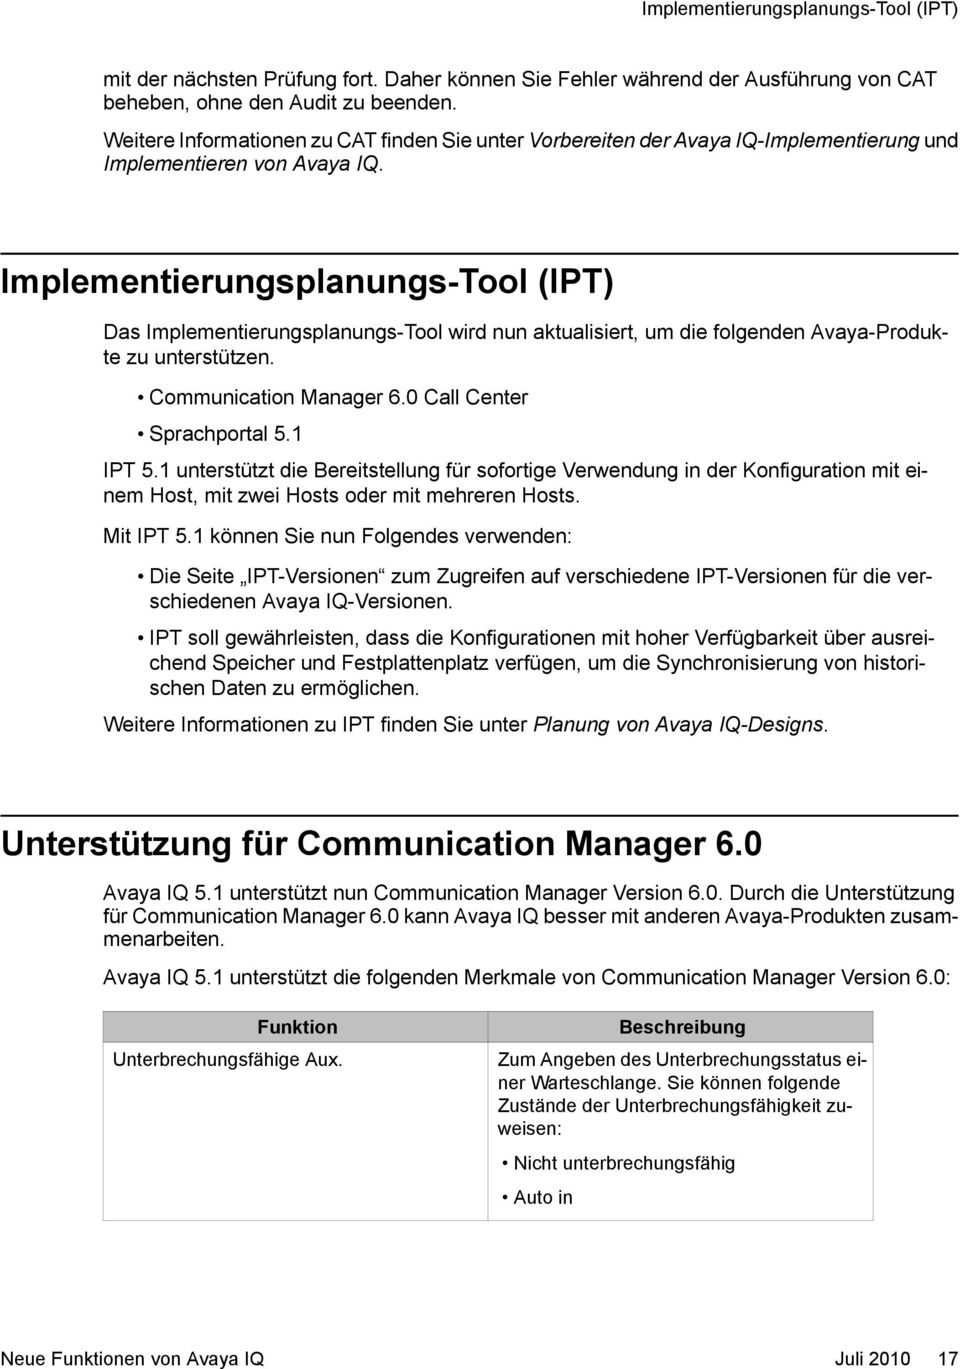 Implementierungsplanungs-Tool (IPT) Das Implementierungsplanungs-Tool wird nun aktualisiert, um die folgenden Avaya-Produkte zu unterstützen. Communication Manager 6.0 Call Center Sprachportal 5.